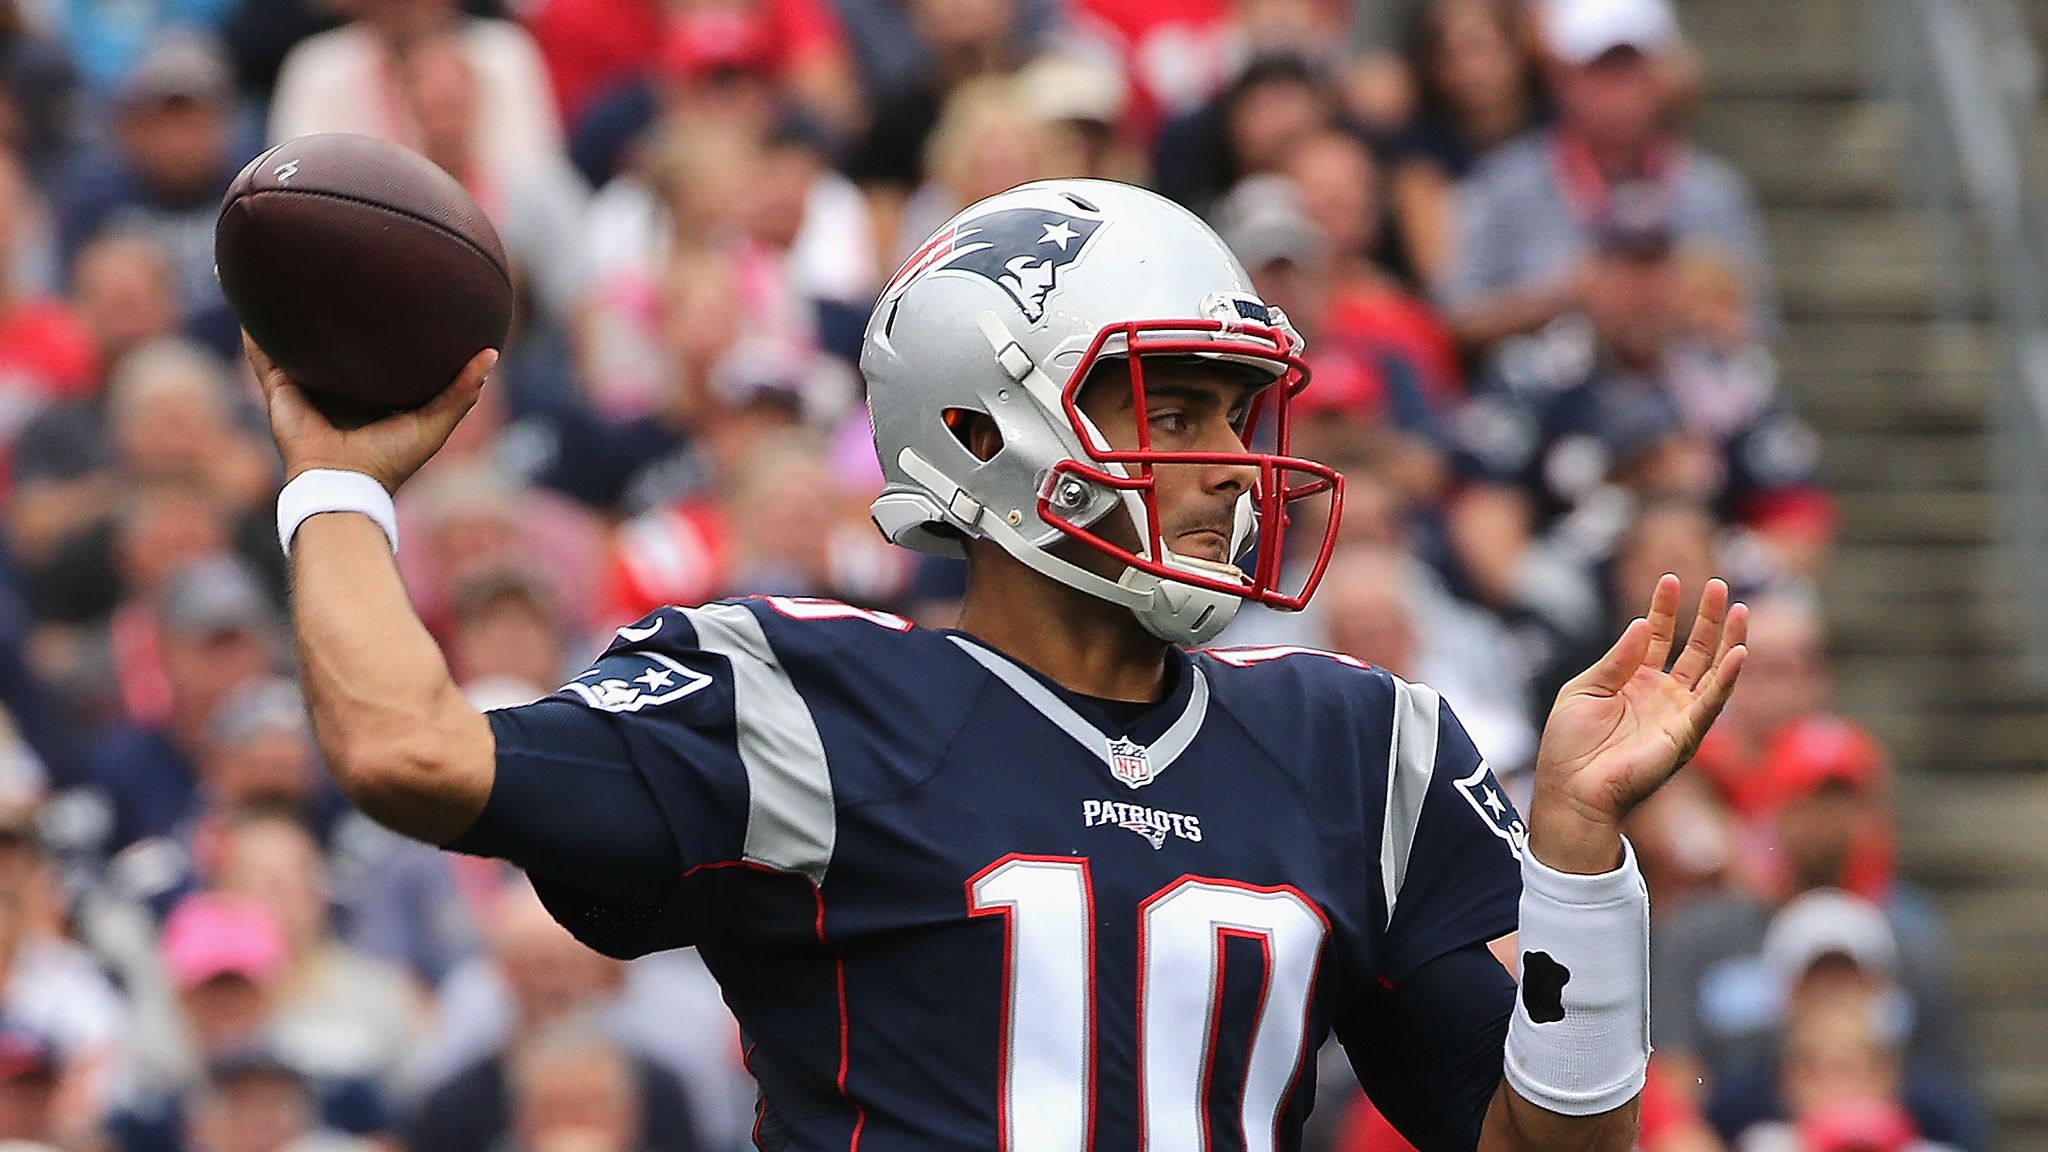 Tom Brady's back-up quarterback Jimmy Garoppolo traded by Patriots